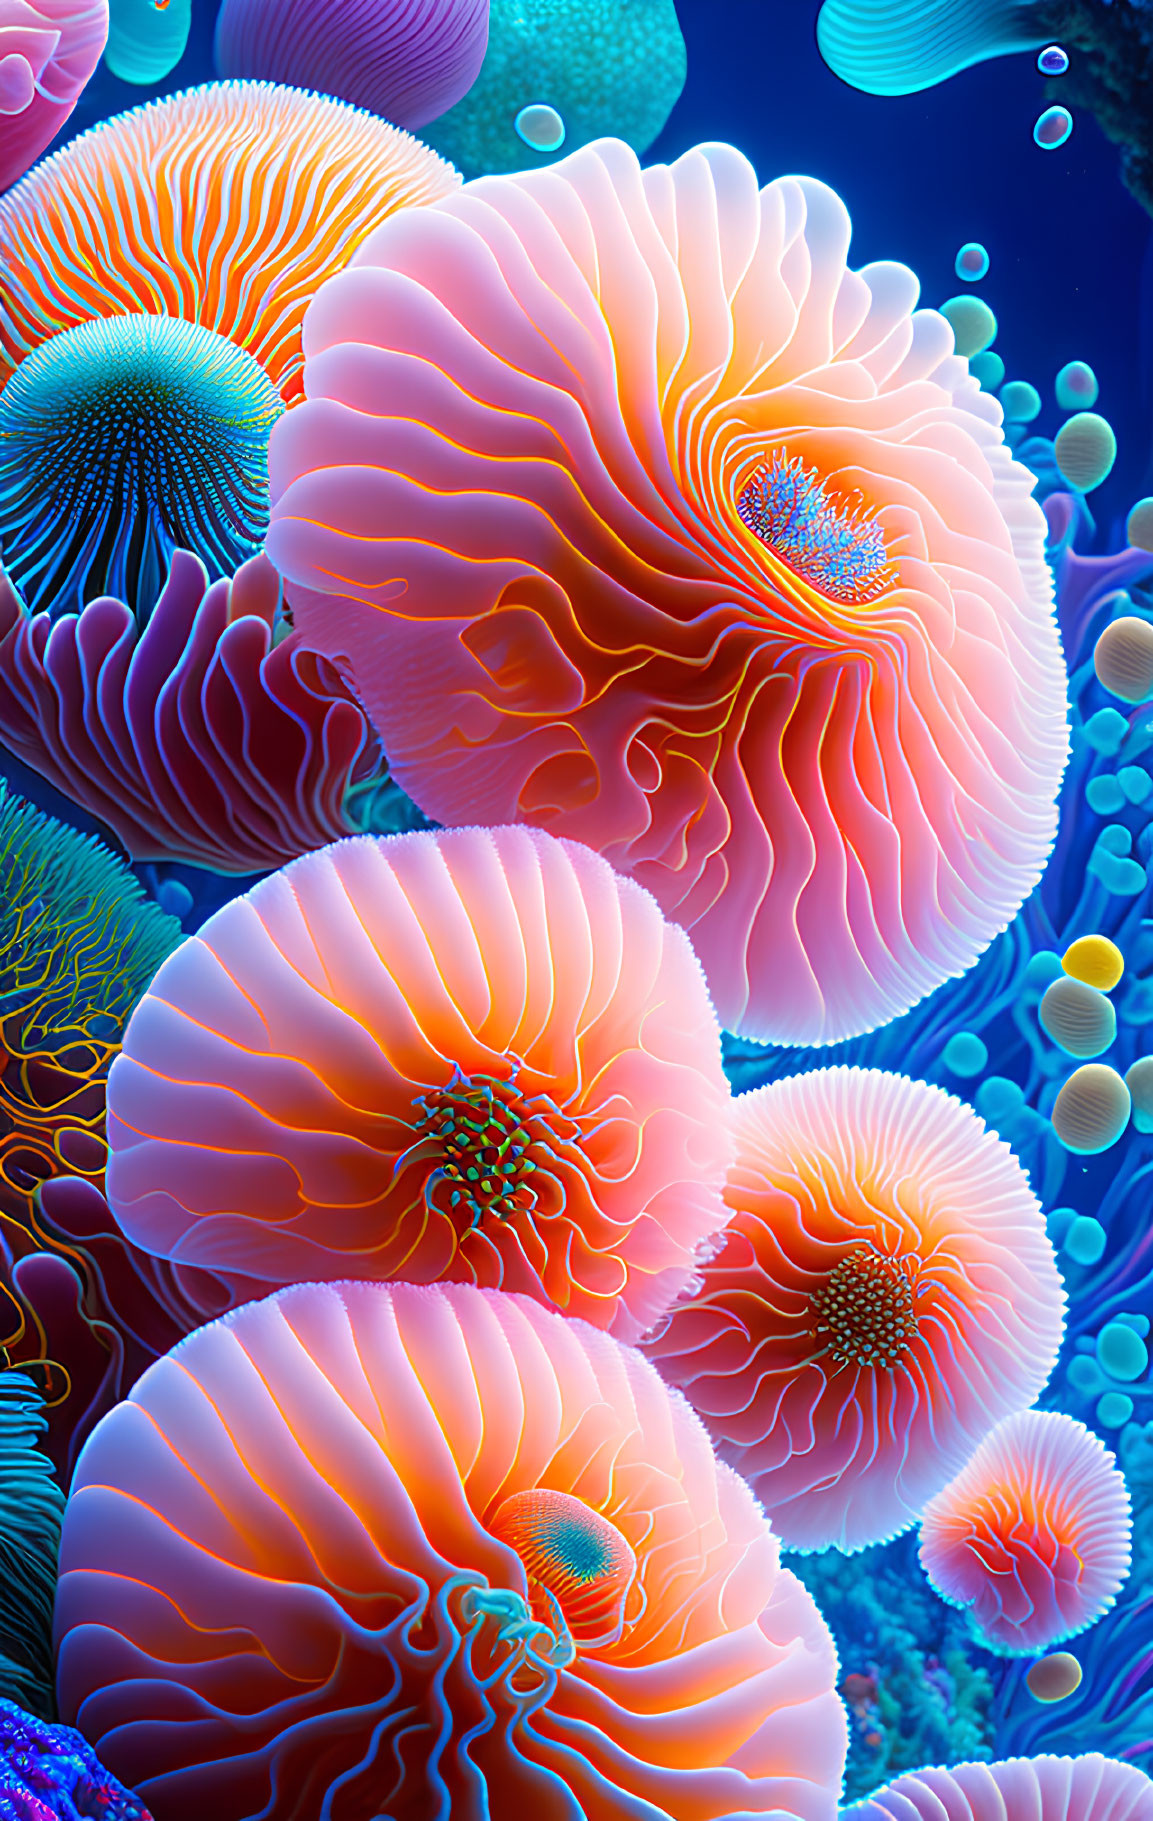 Colorful Coral Organisms in Vibrant Underwater Scene